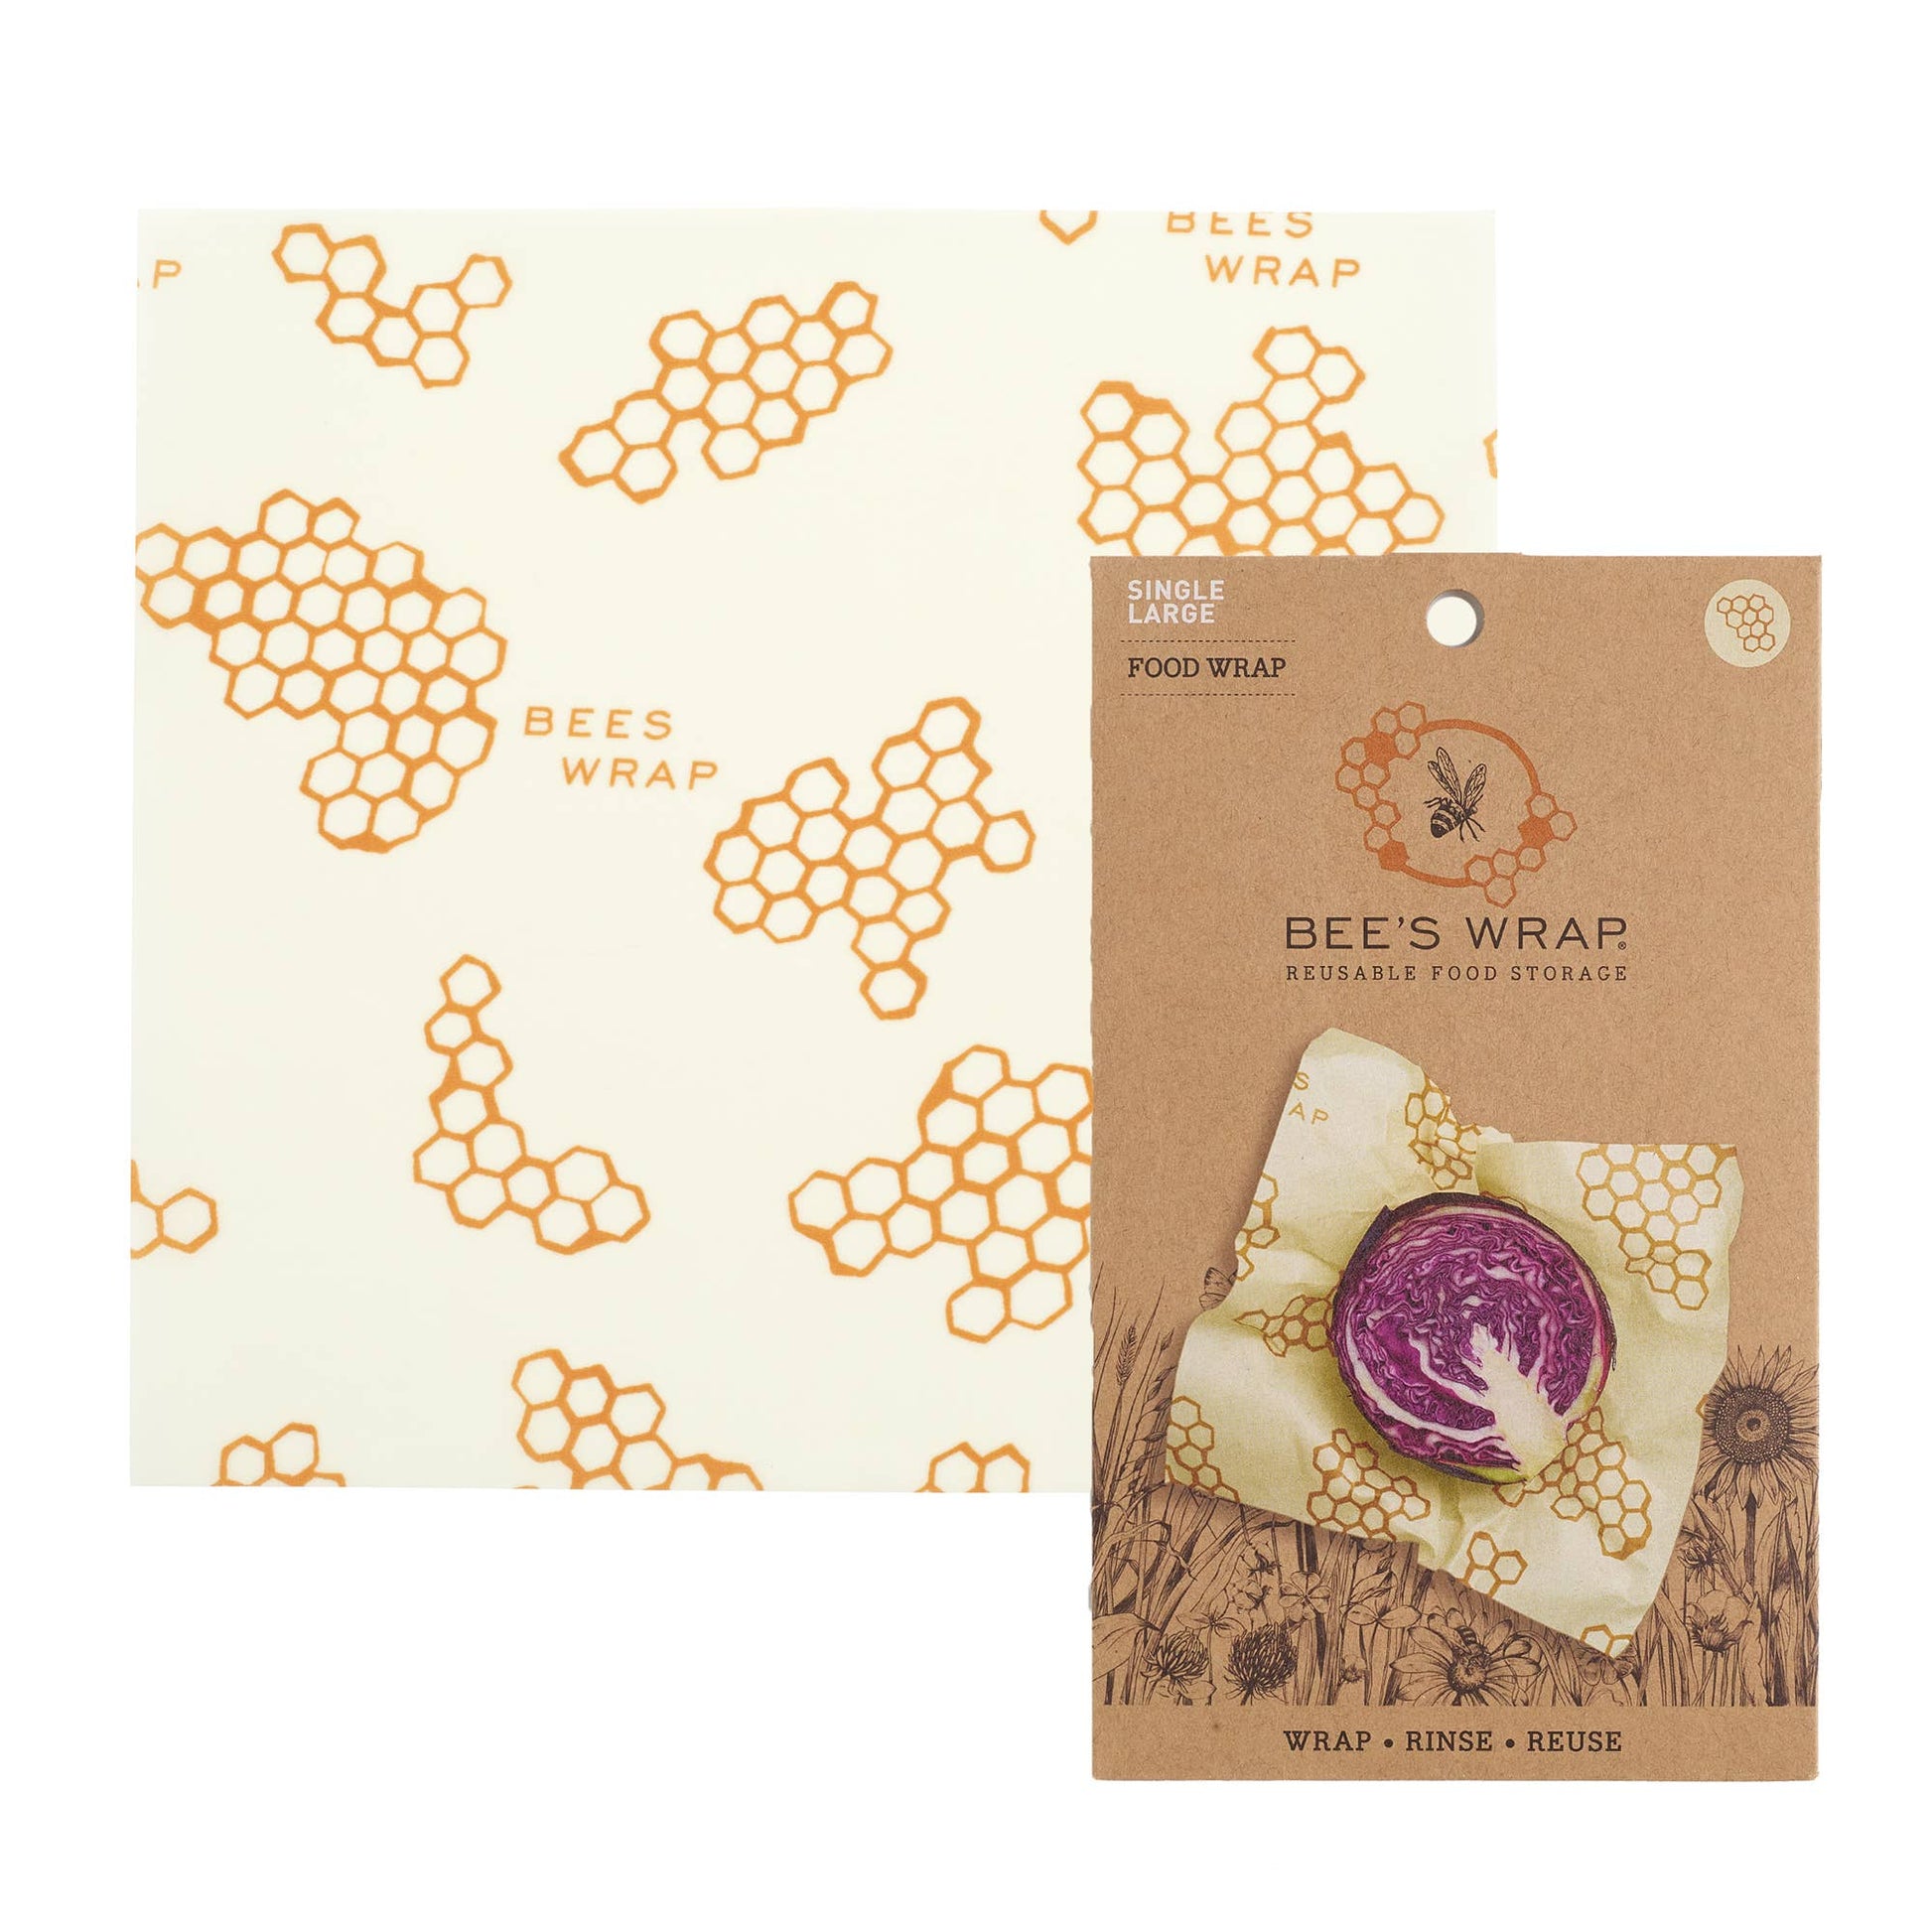 Bee's Wrap - Single Large Wrap - Honeycomb Print Bee's Wrap